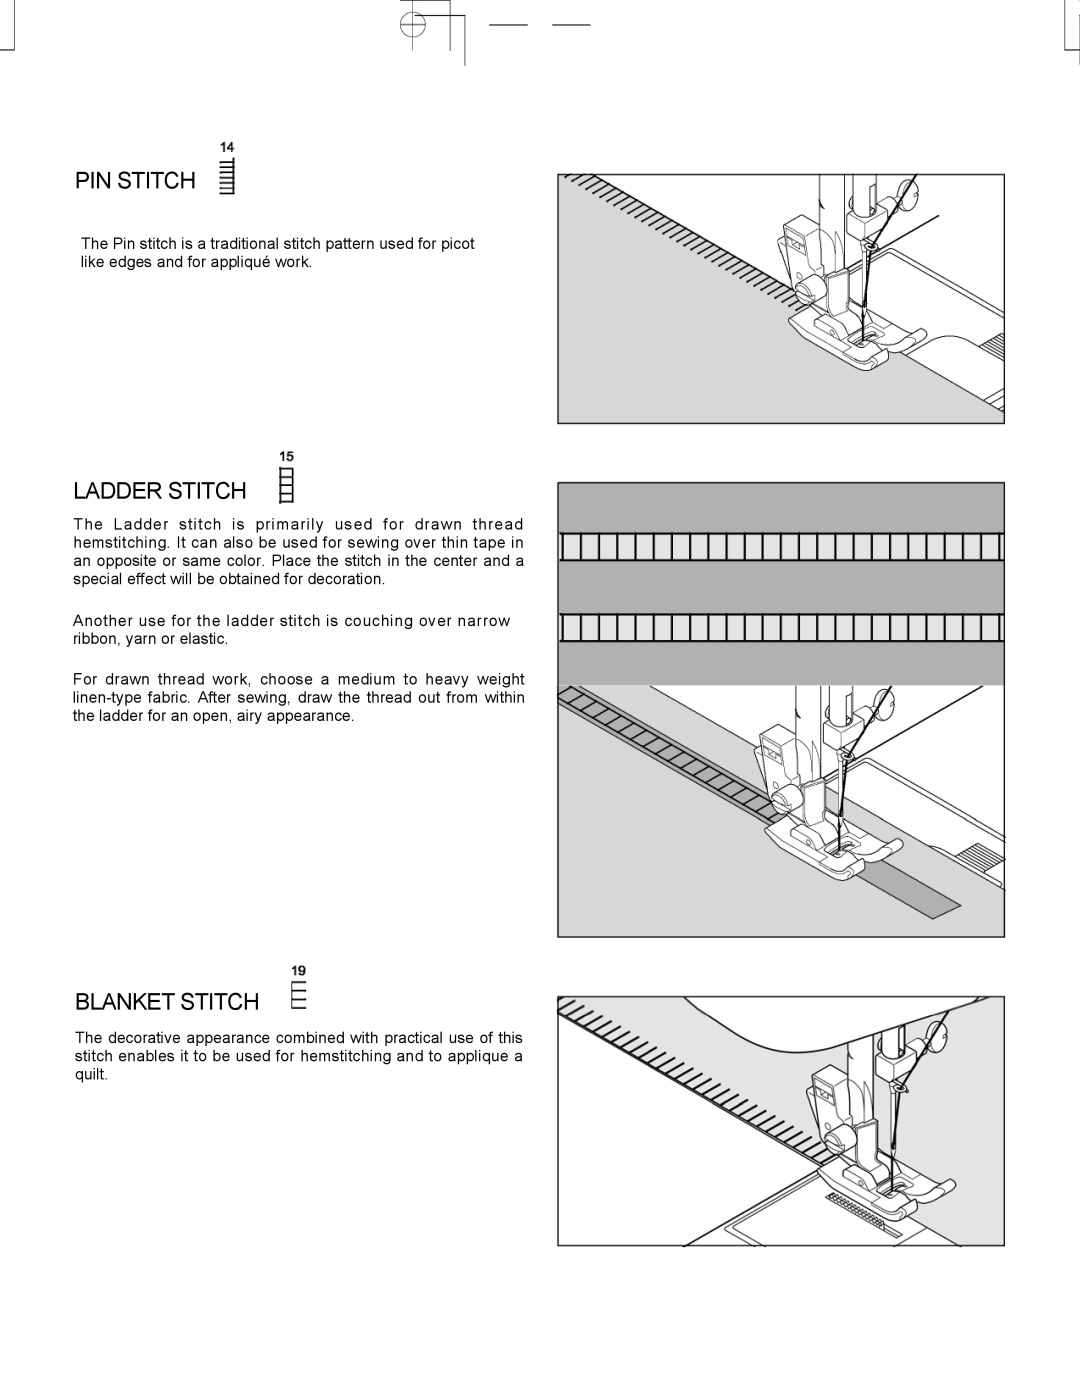 Singer CE-150 instruction manual PIN Stitch, Ladder Stitch, Blanket Stitch 